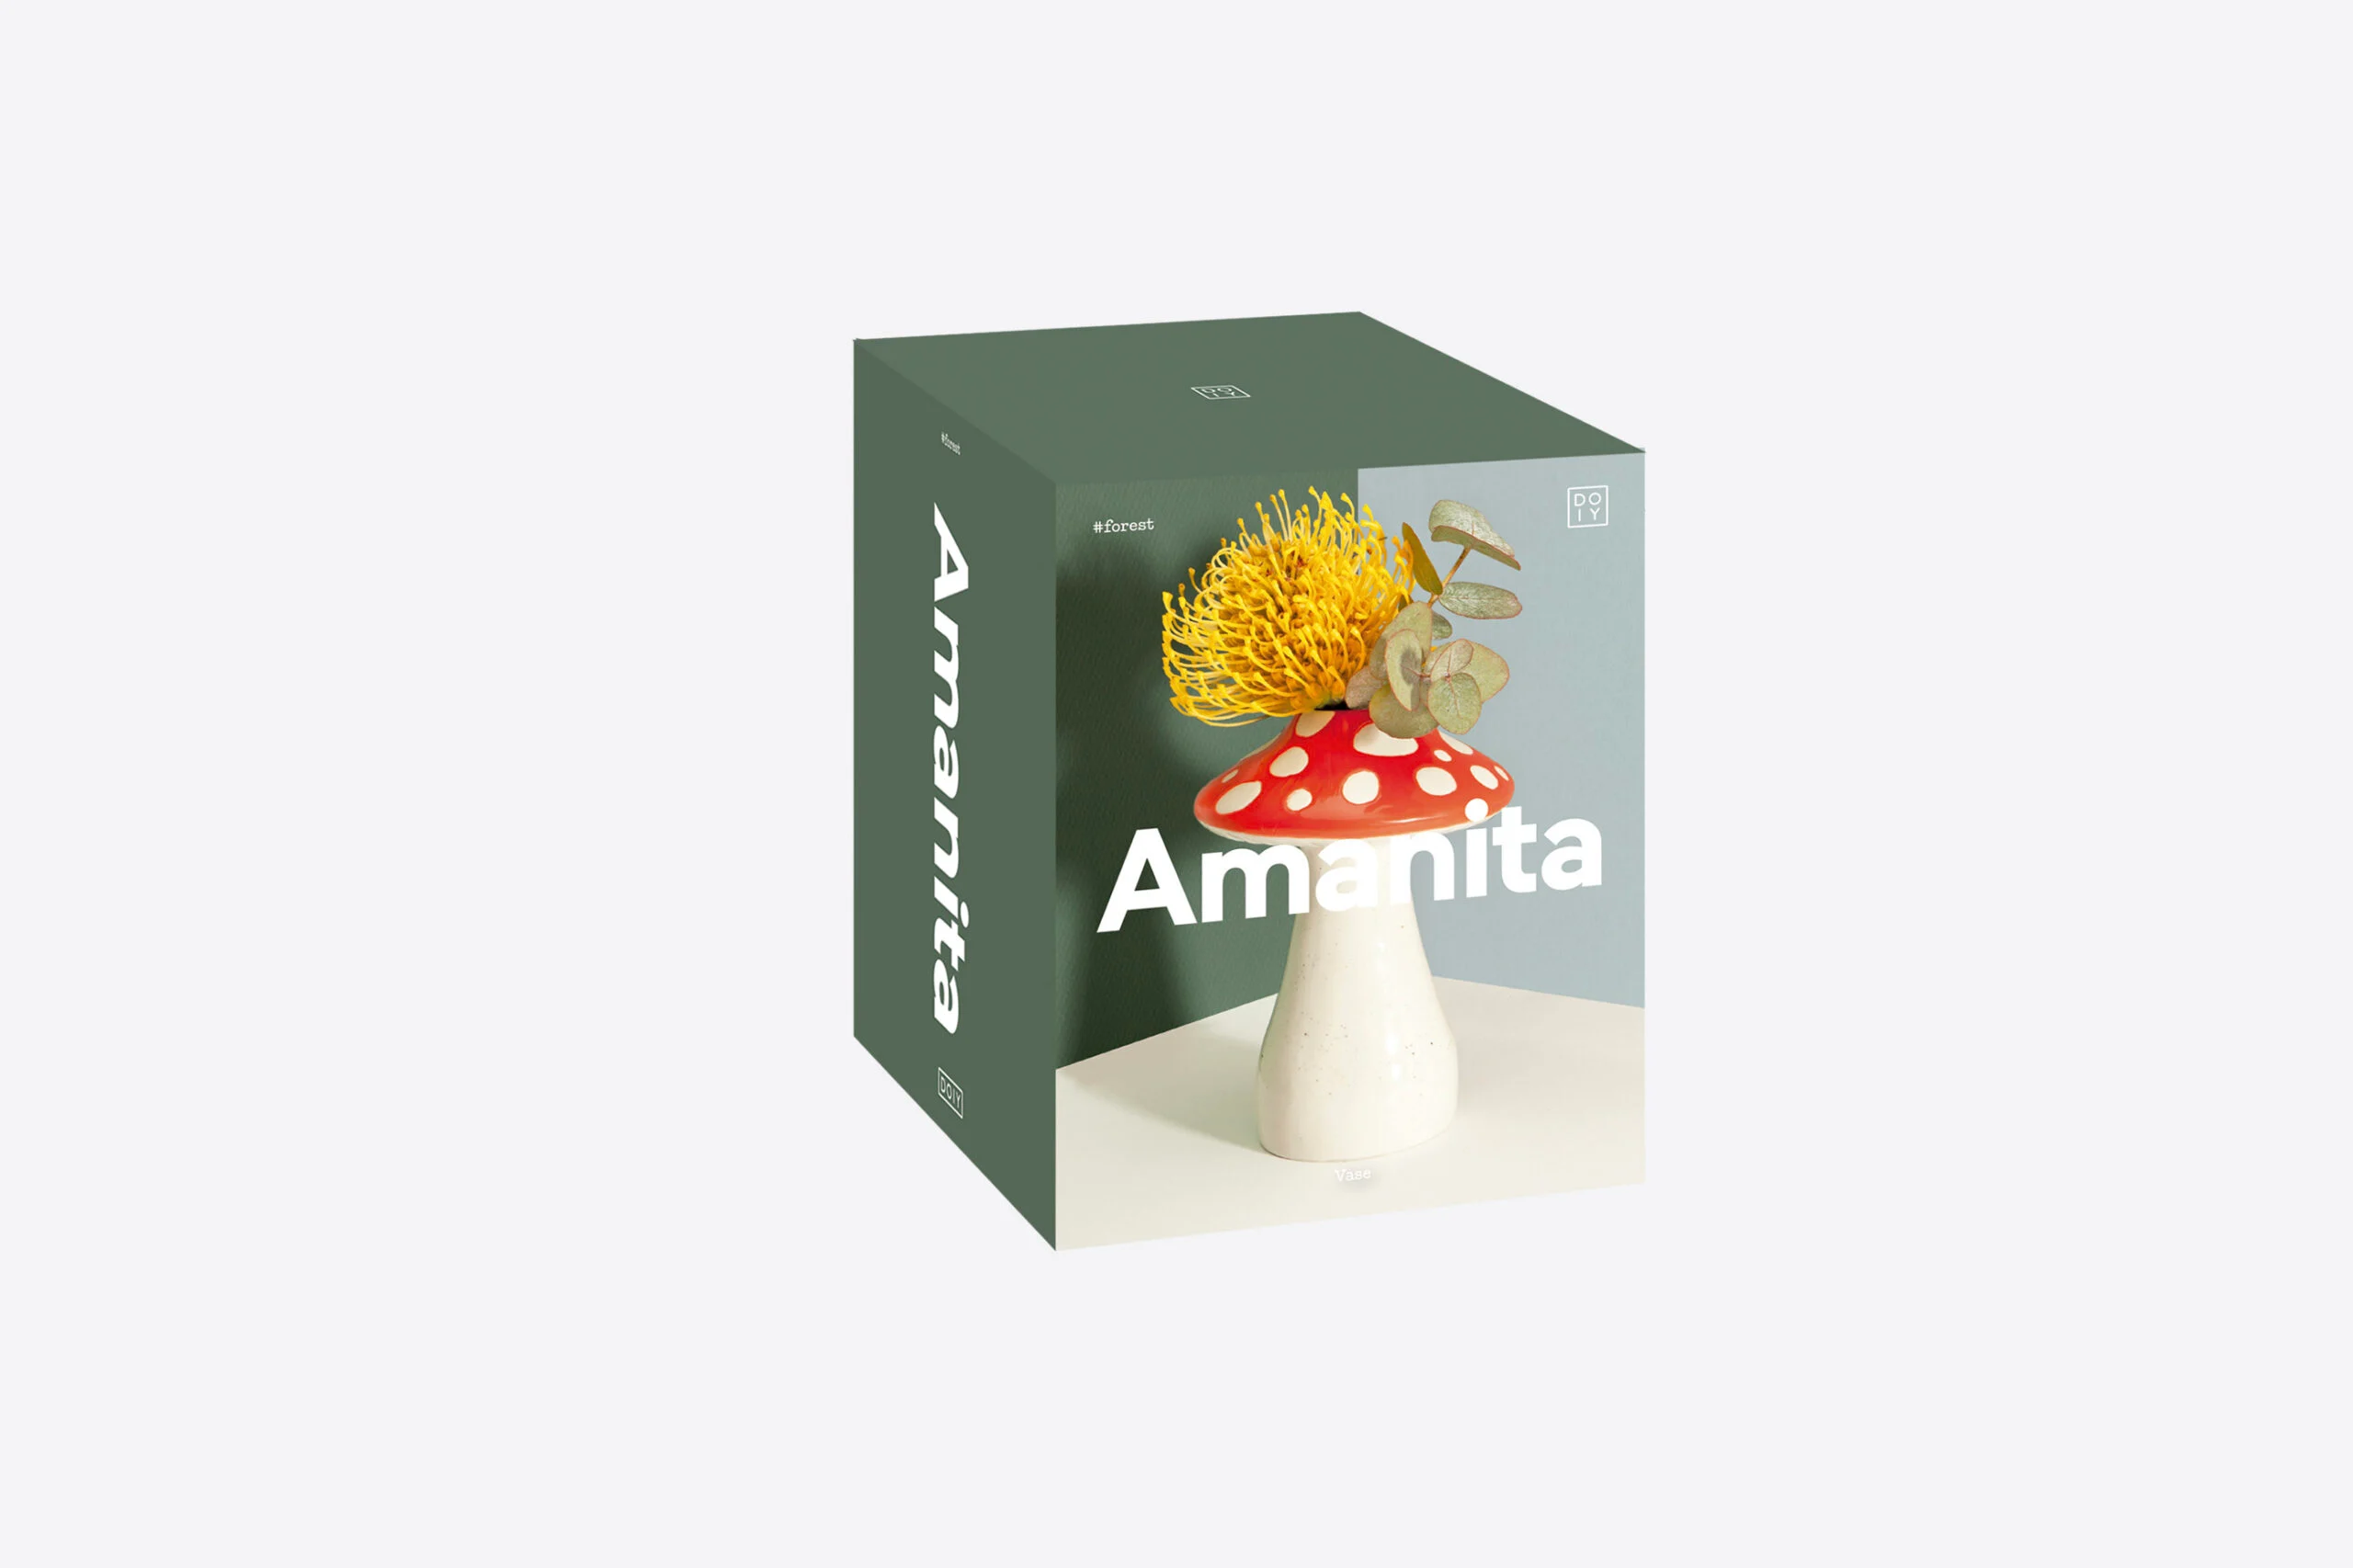 Vase mushroom amanita small